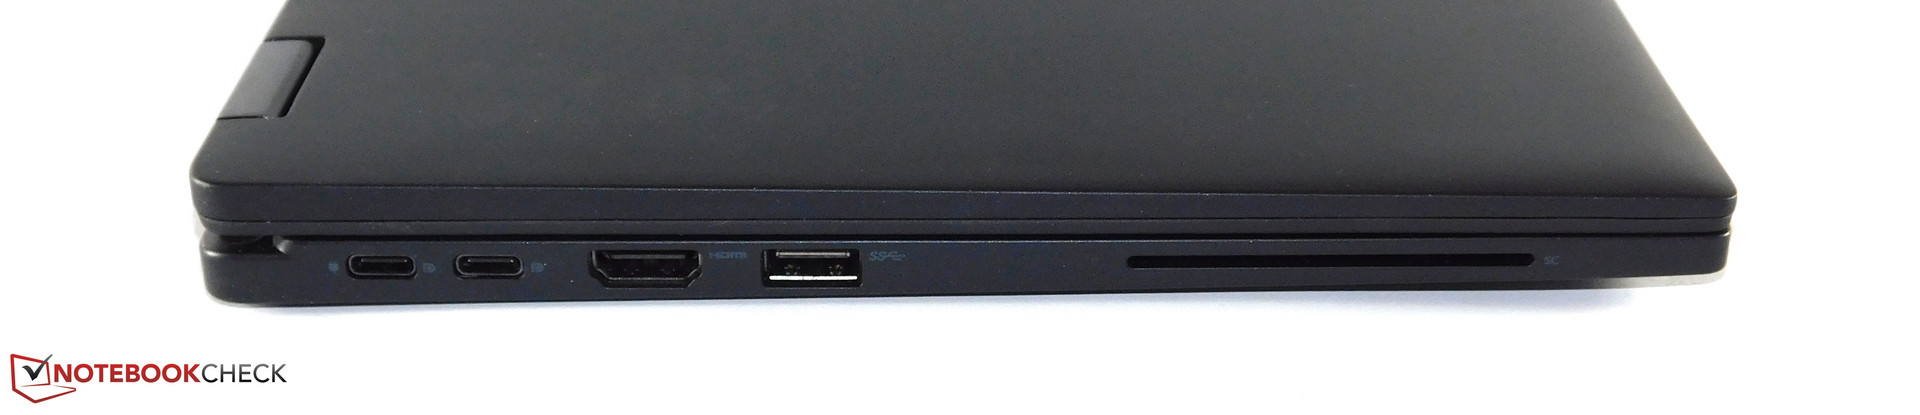 Dell Latitude 5289 (i5, 256GB, 8GB) Convertible Review   Reviews